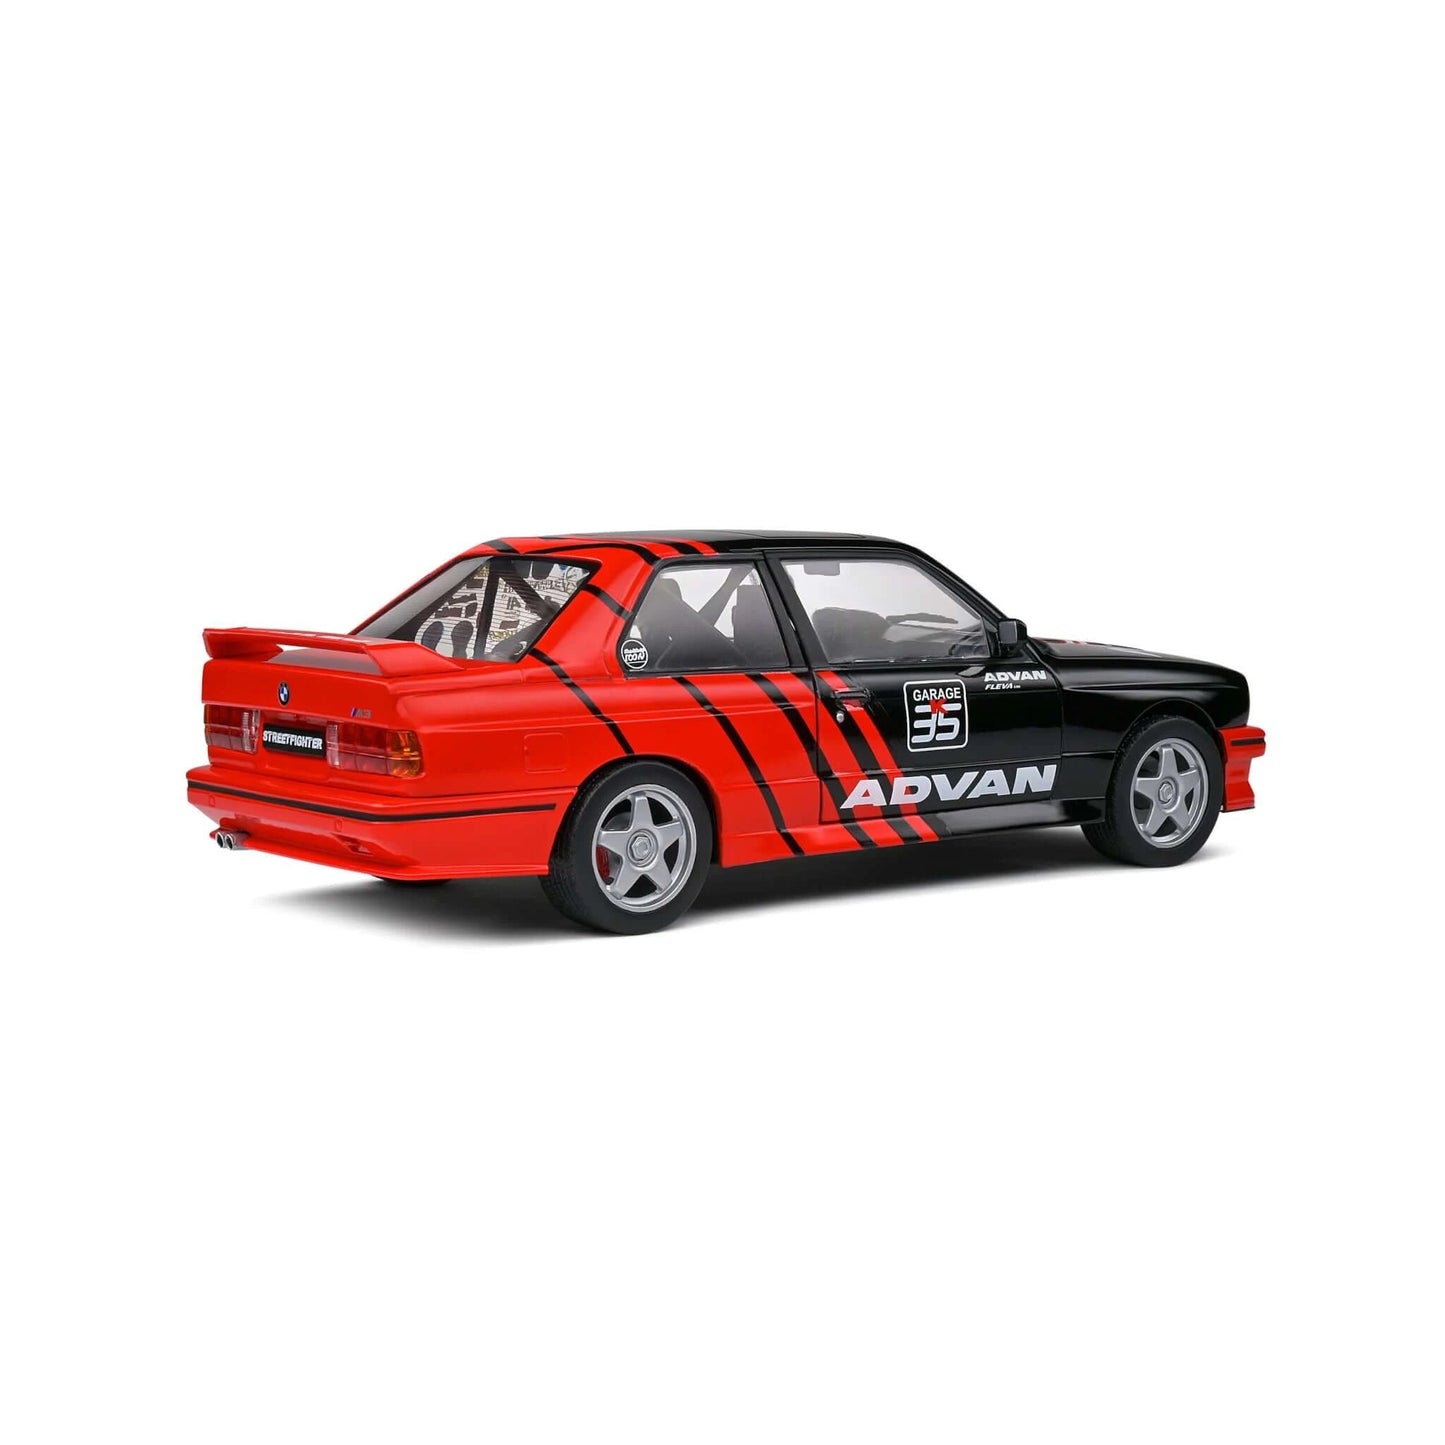 BMW E30 M3 Drift Team Advan 1990 Solido 1/18 - S1801521